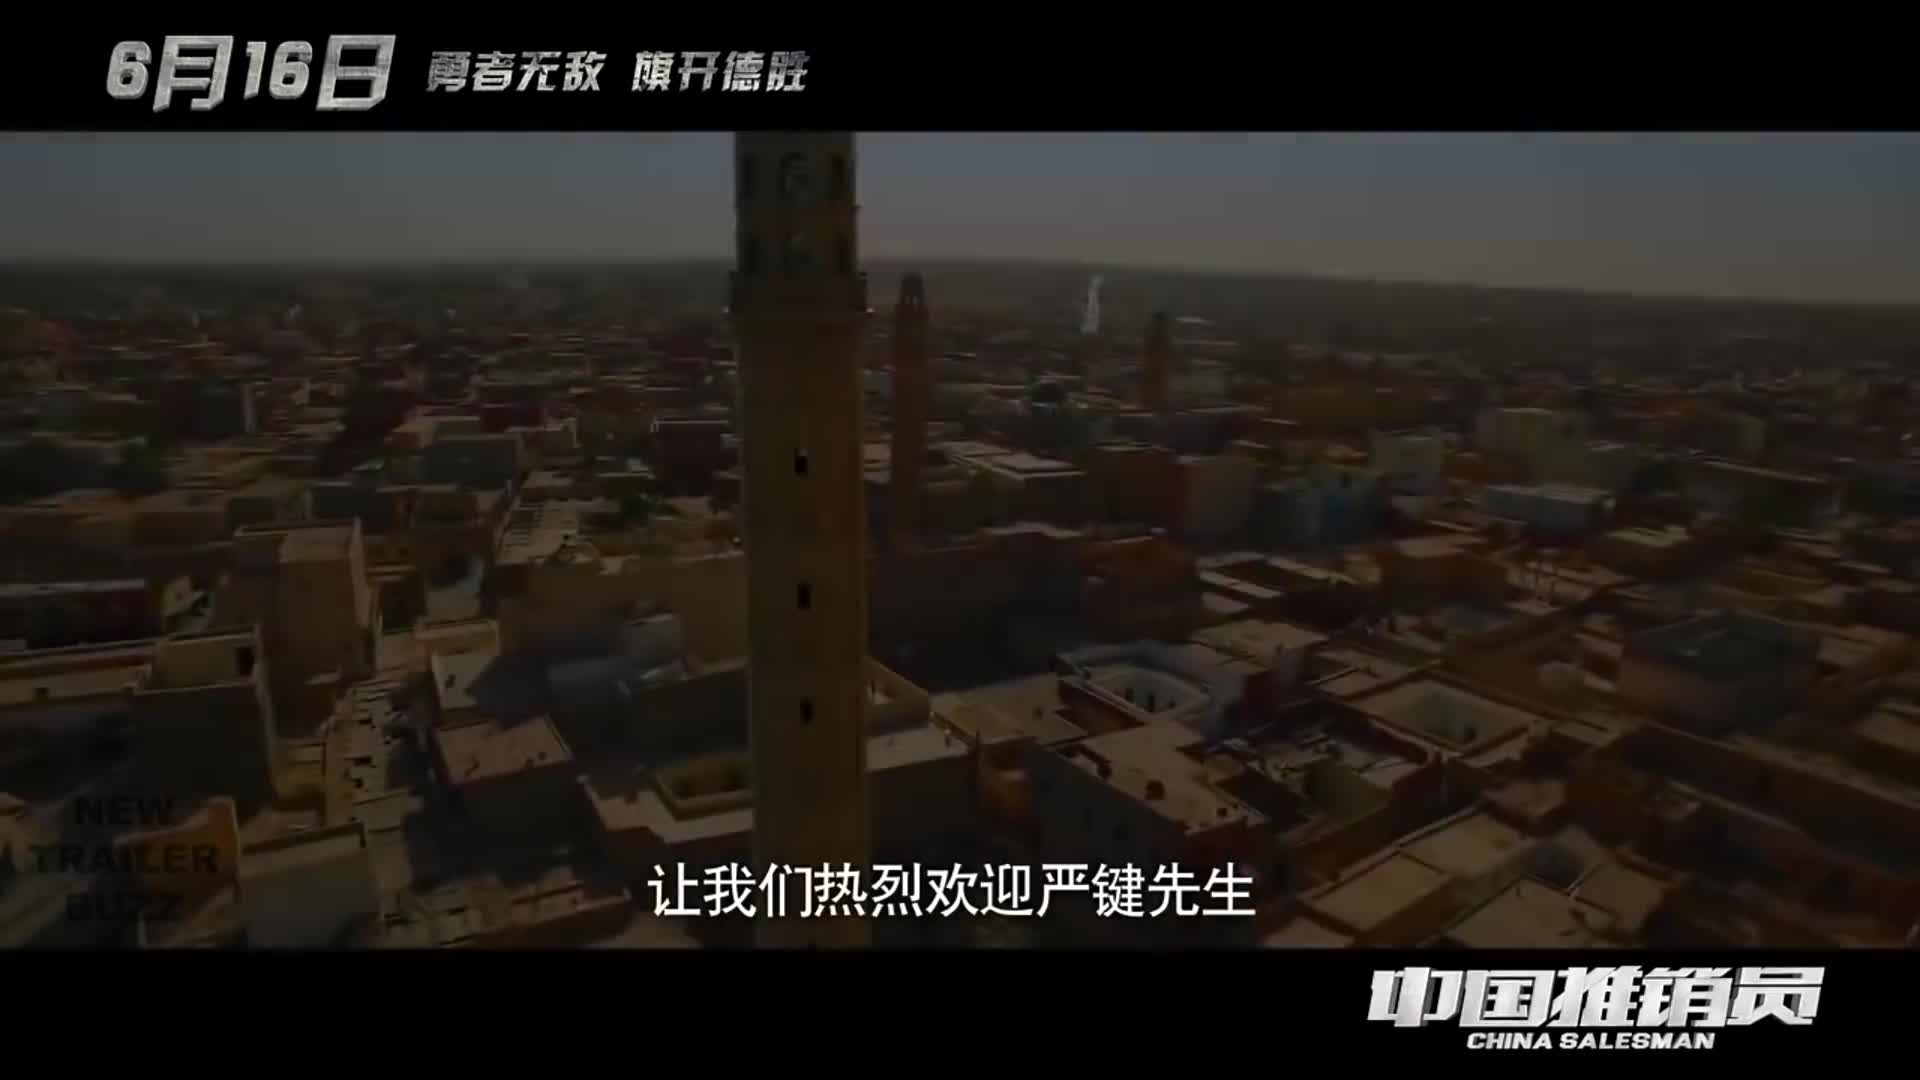 CHINA SALESMAN Trailer